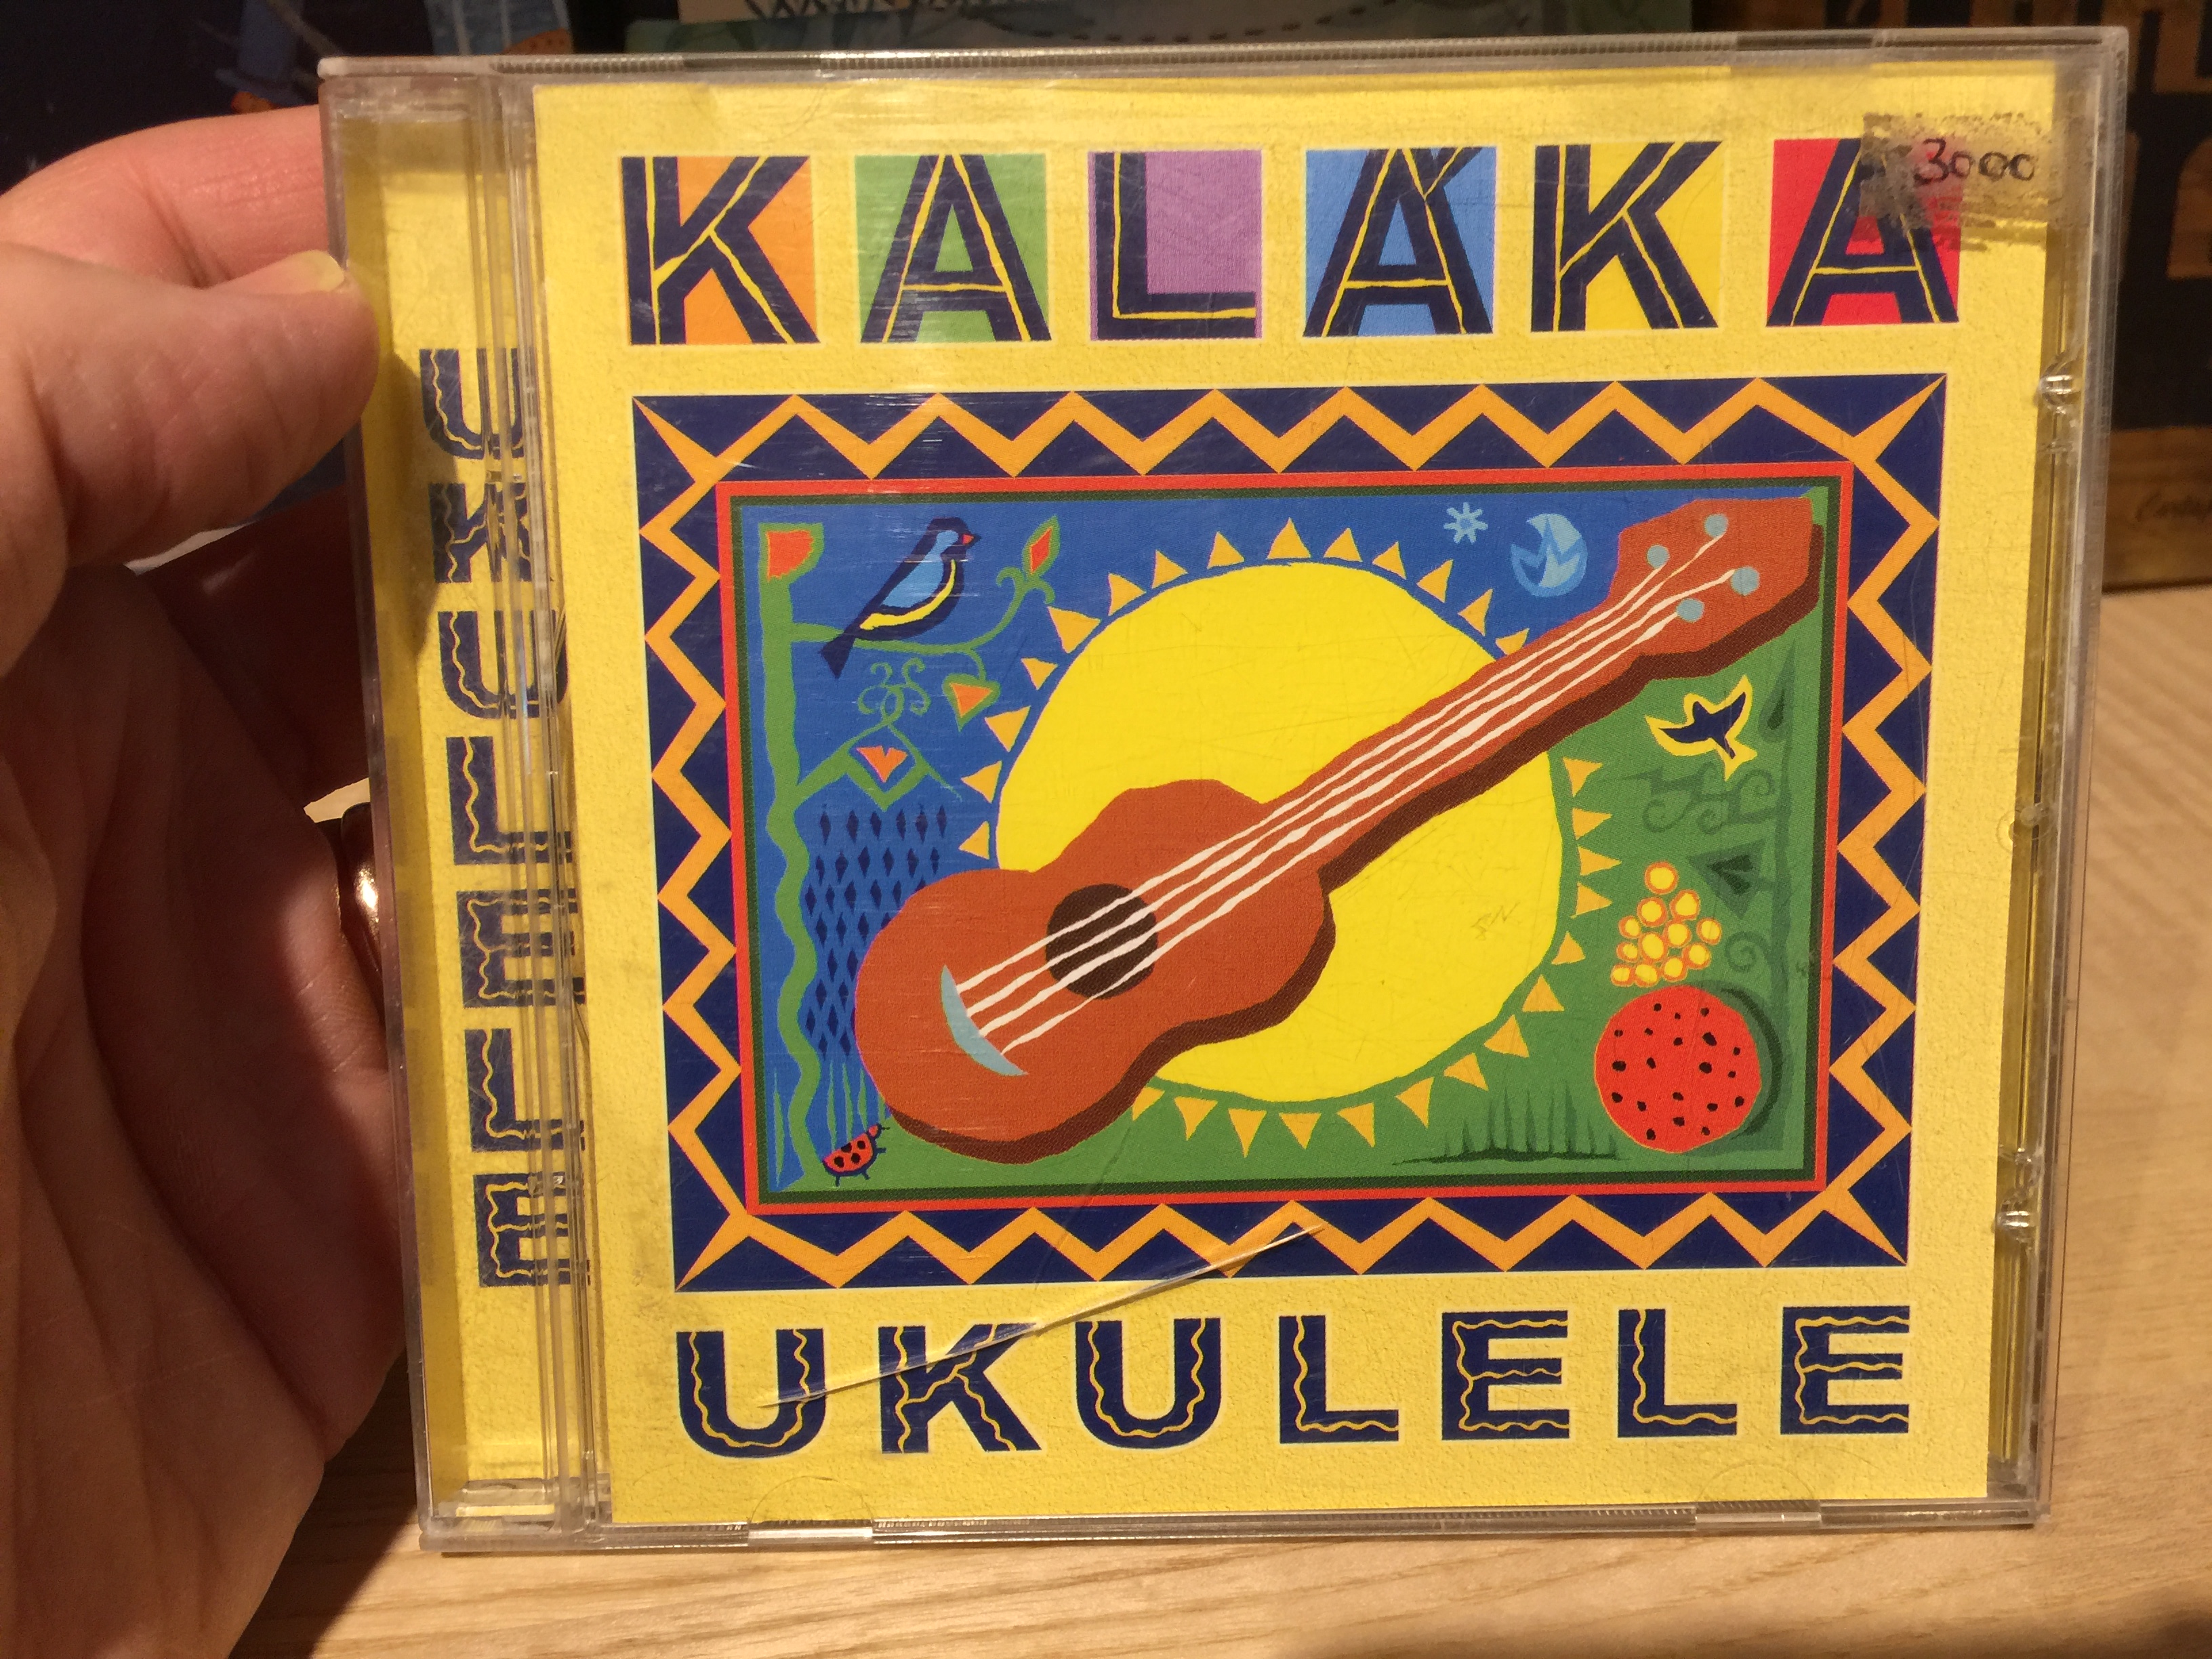 kal-ka-ukulele-gryllus-audio-cd-2000-gcd-021-1-.jpg